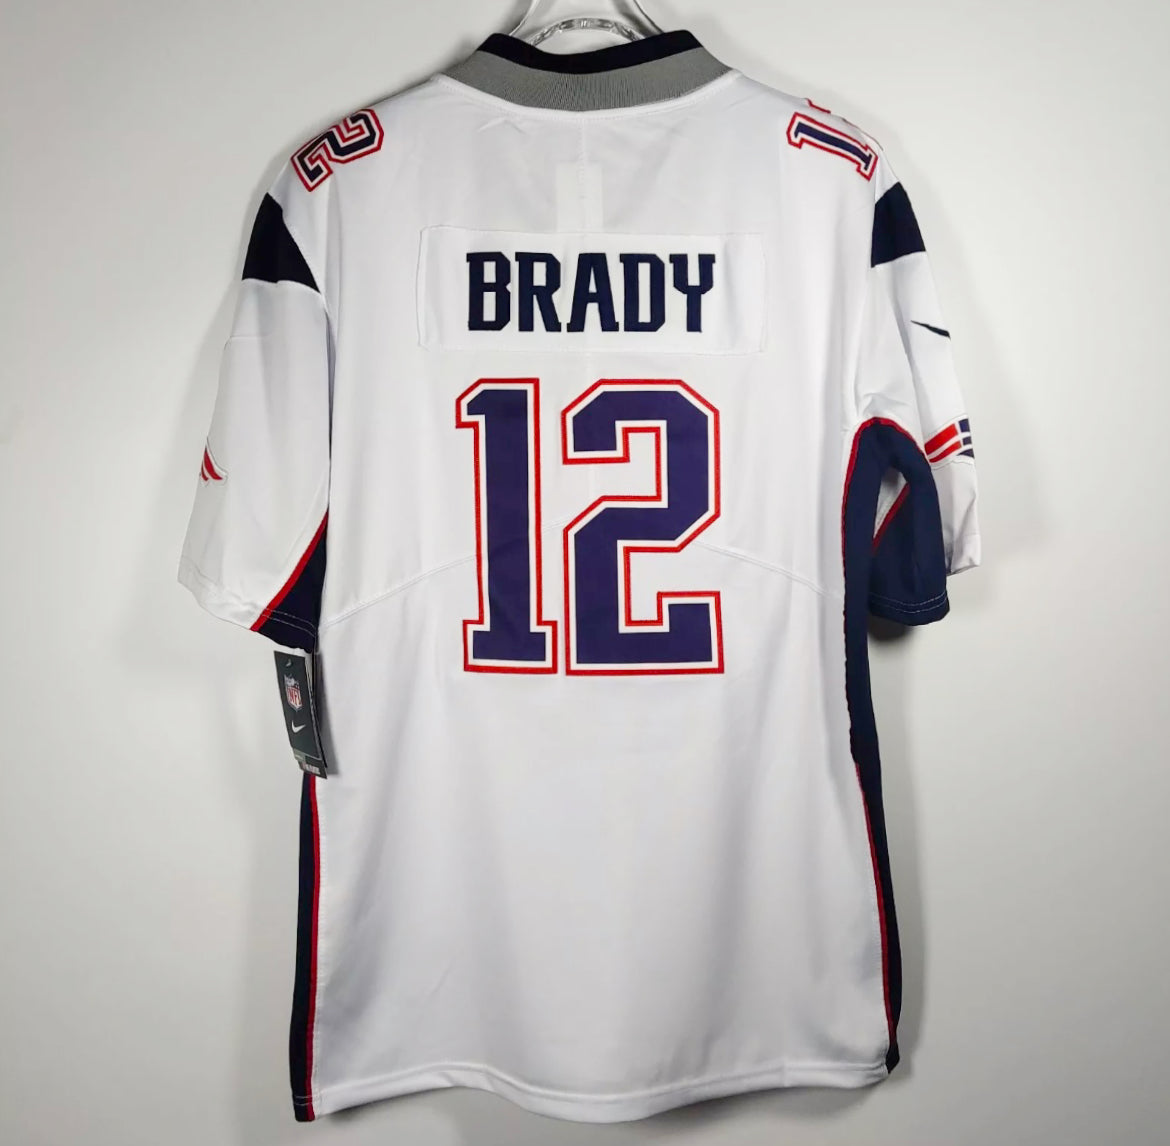 Tom Brady New England Patriots NFL Throwback Classic Iconic Legends Jersey - White